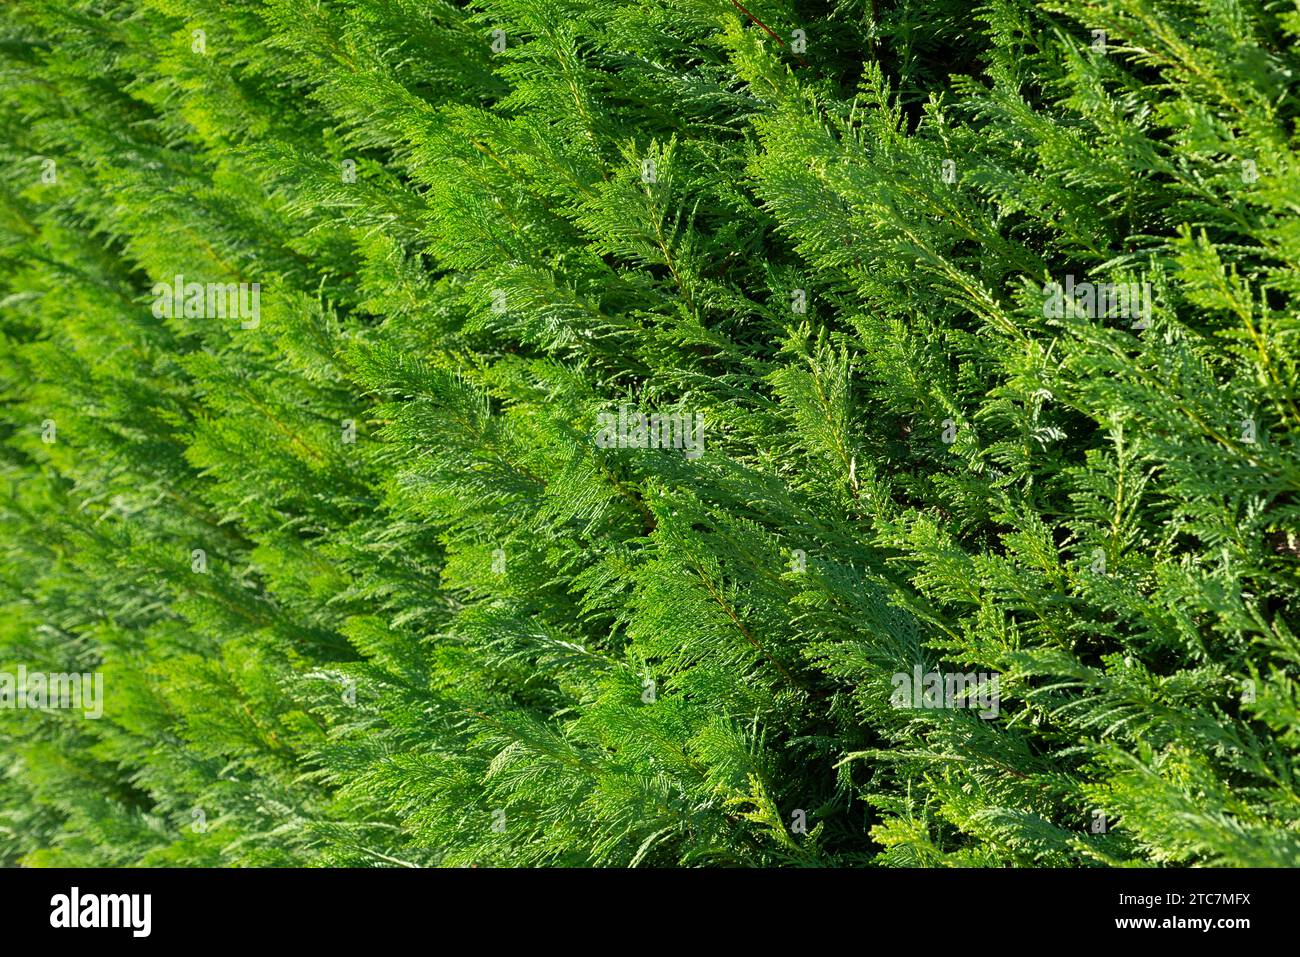 Italy, Lombardy, Lawson Cypress Hedge, Chamaecyparis Lawsoniana Stock Photo